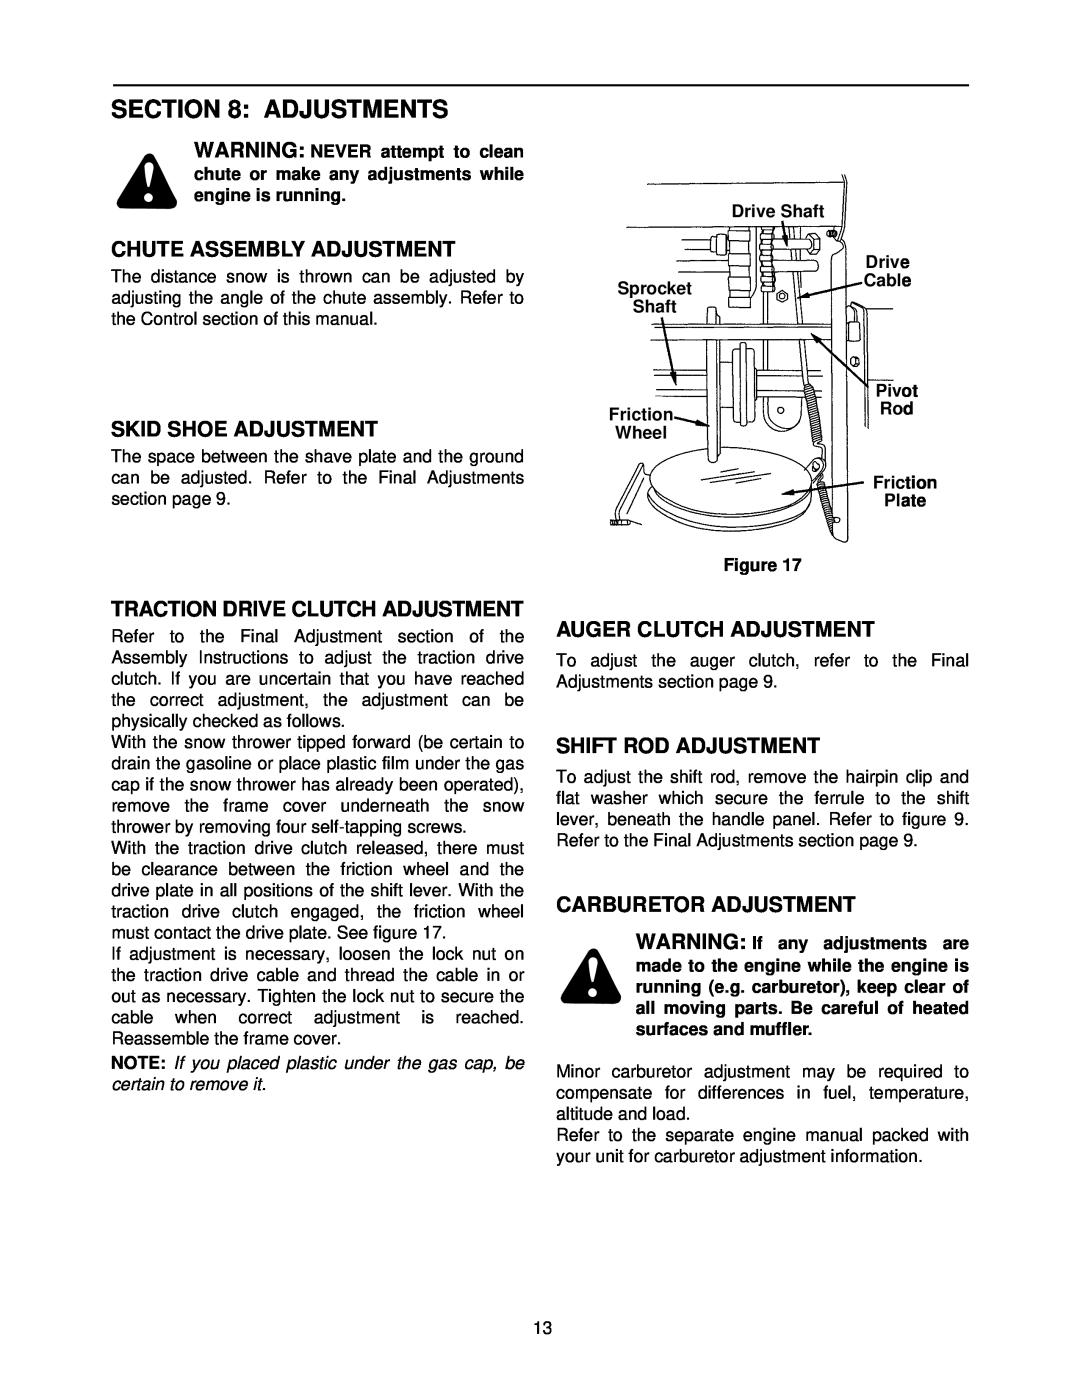 MTD E760, E740 manual Adjustments, Chute Assembly Adjustment, Skid Shoe Adjustment, Traction Drive Clutch Adjustment 